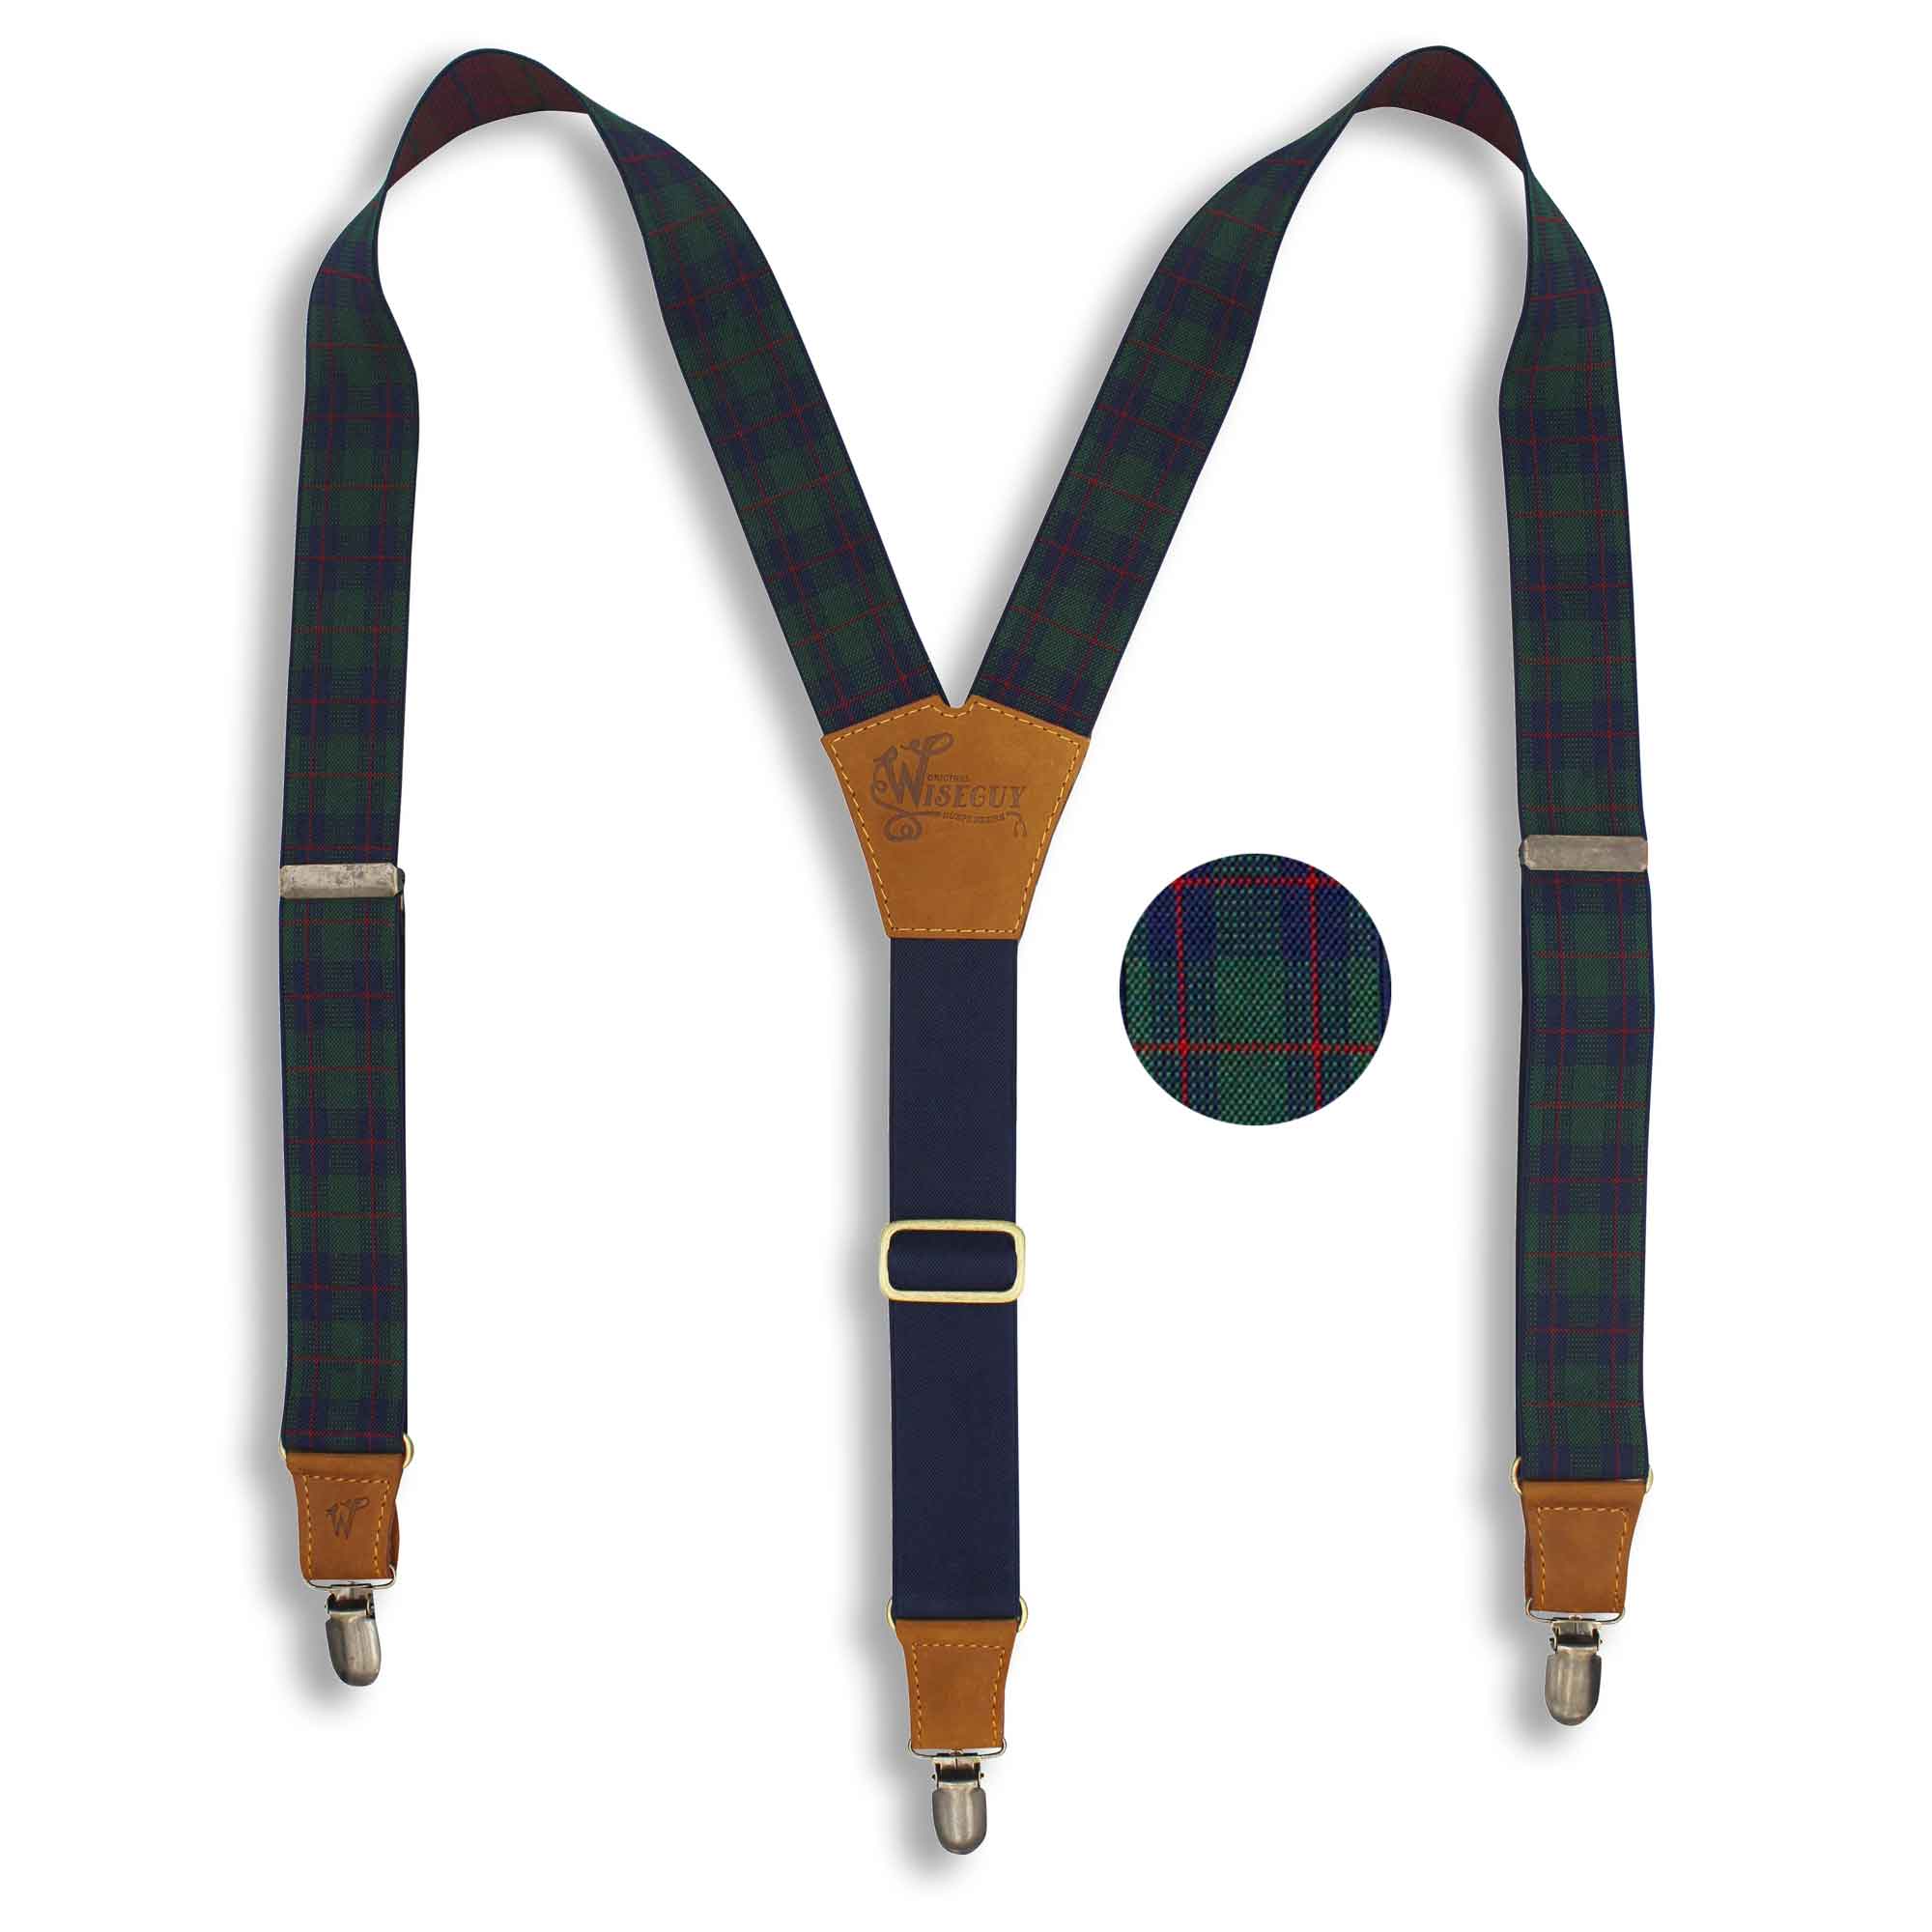 Tartan Green-navy-red Suspenders wide straps (1.36 inch/ 3.5 cm) - Wiseguy Suspenders